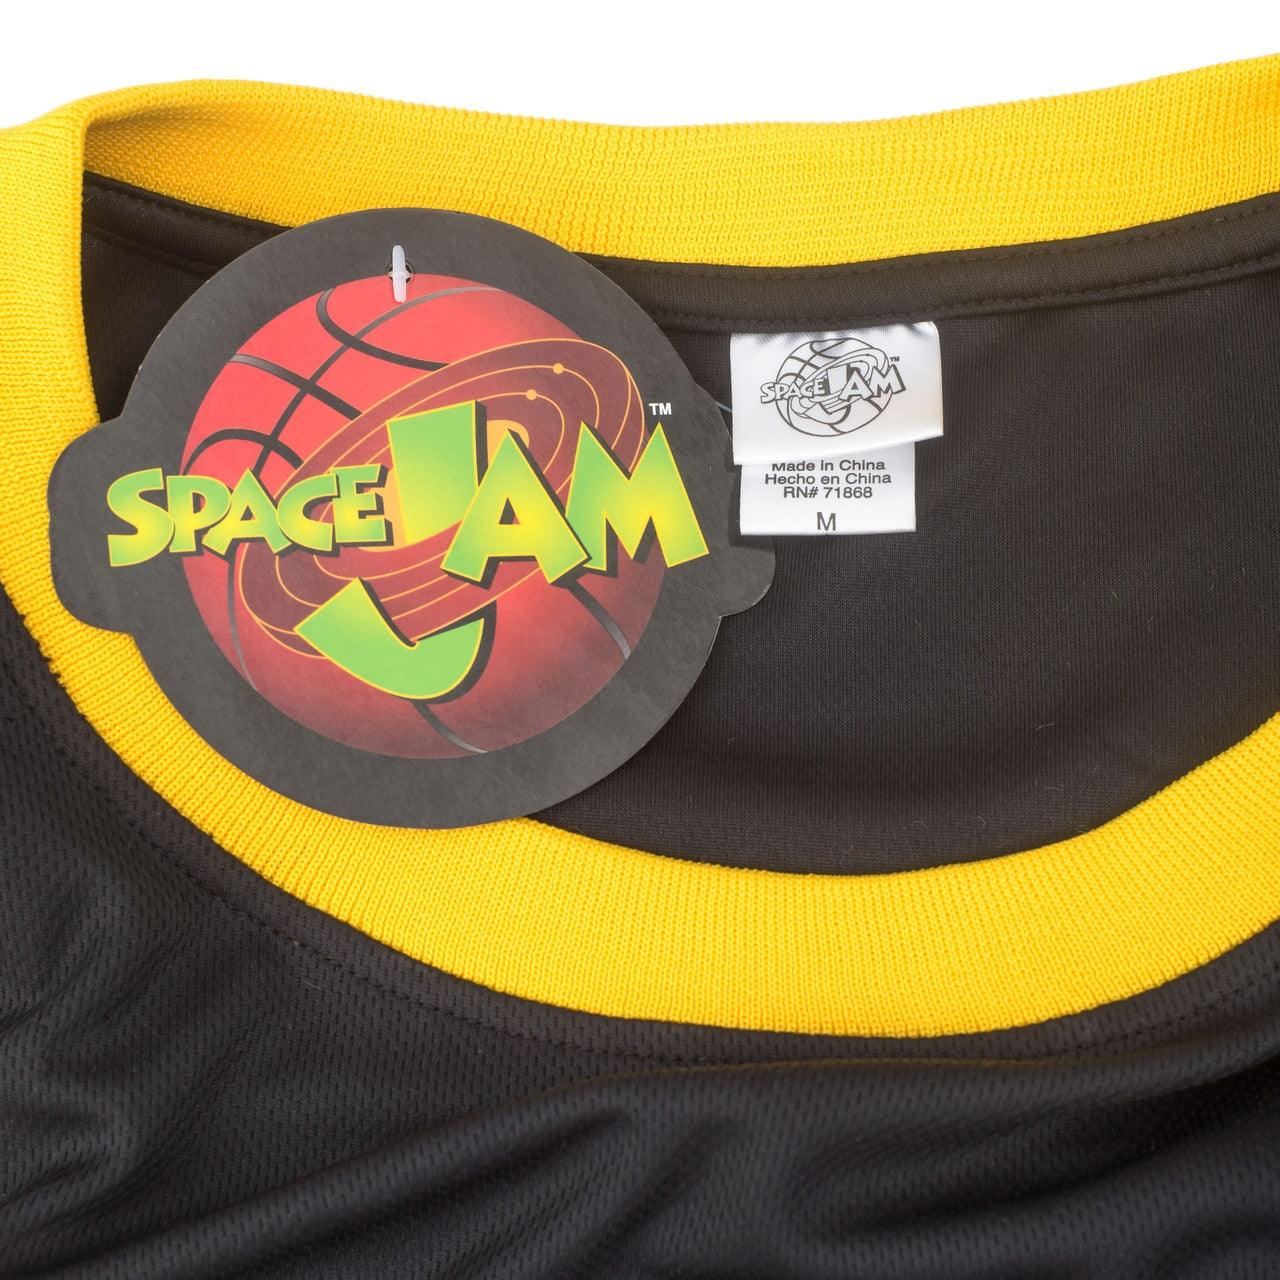 100% Authentic Jordan Brand Space Jam Tune Squad Jersey, 2XL